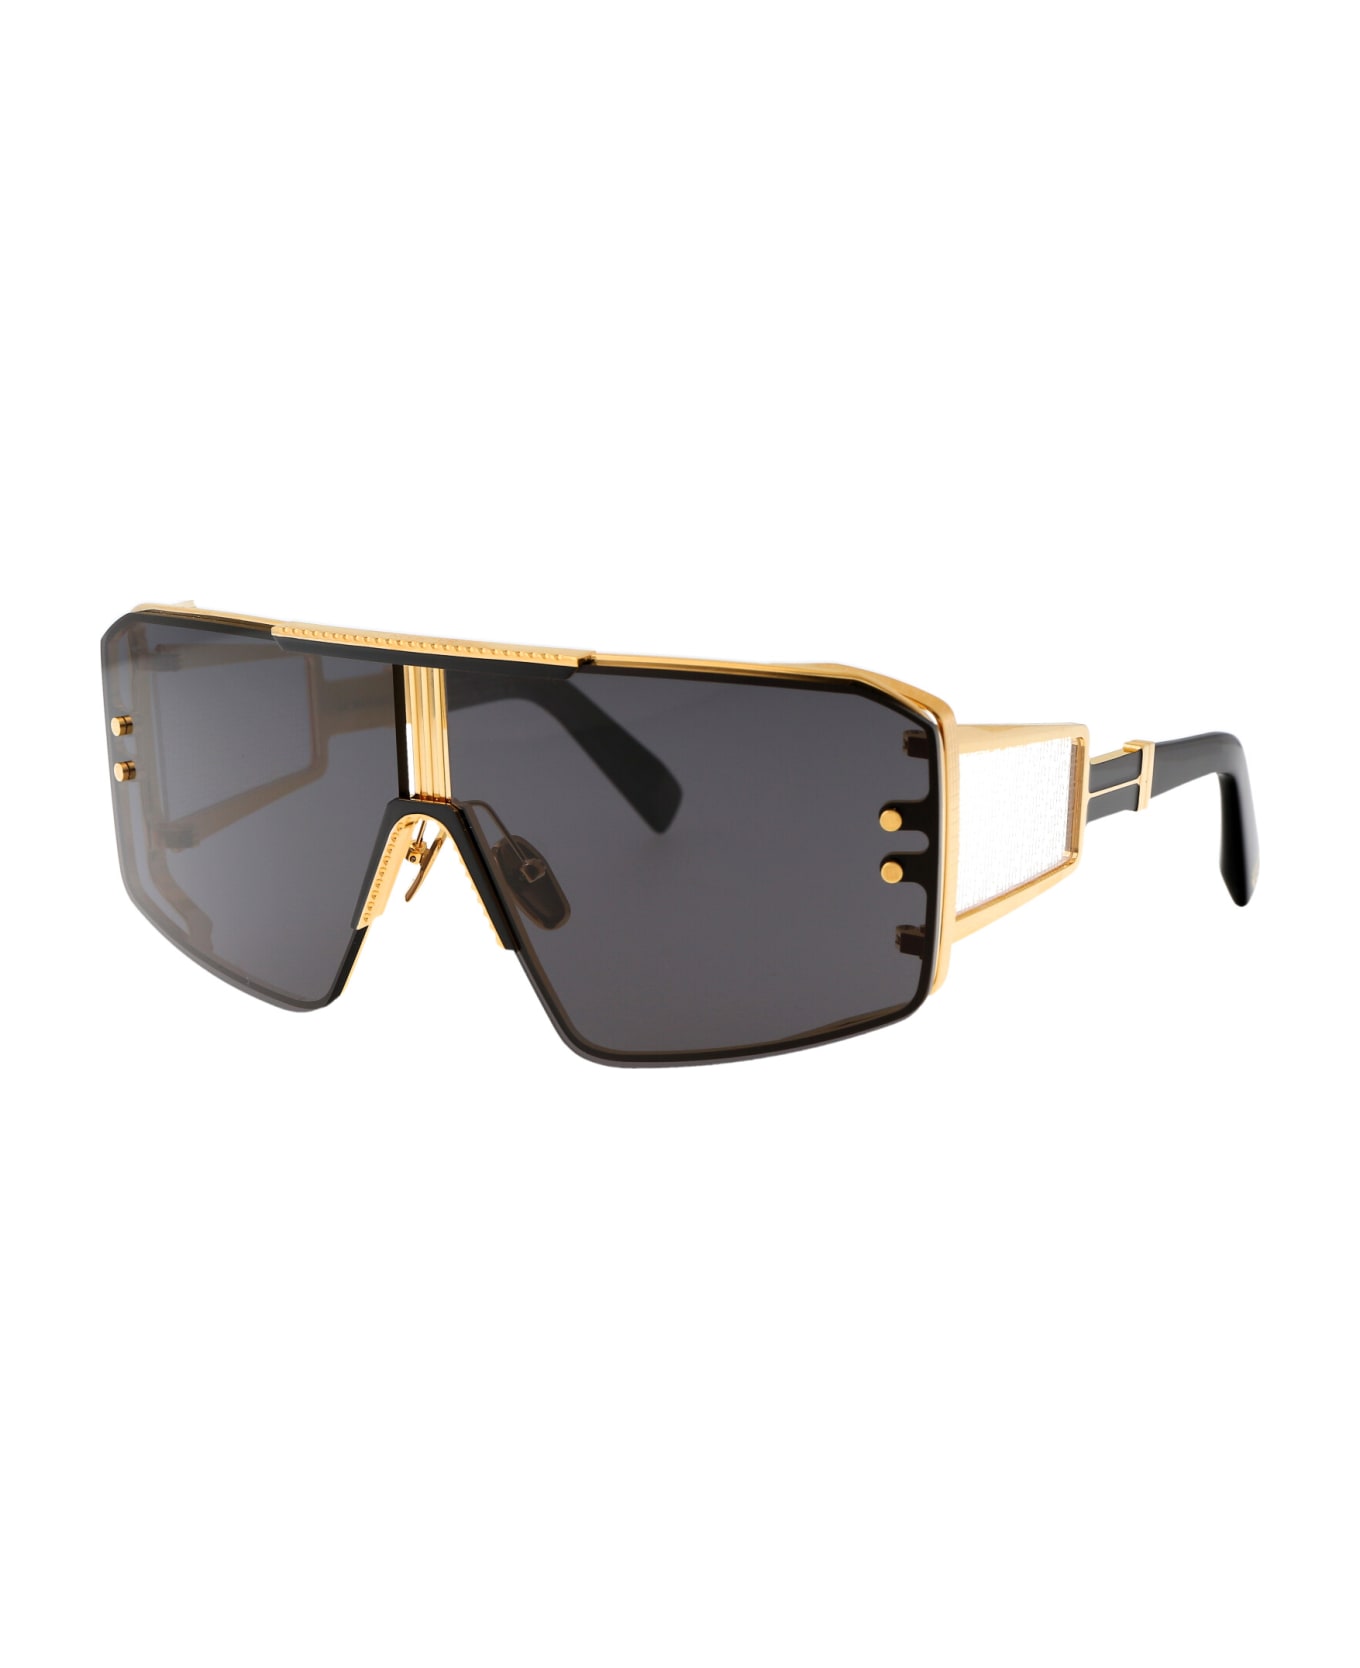 Balmain Le Masque Sunglasses - 146A 146A GLD - BLK